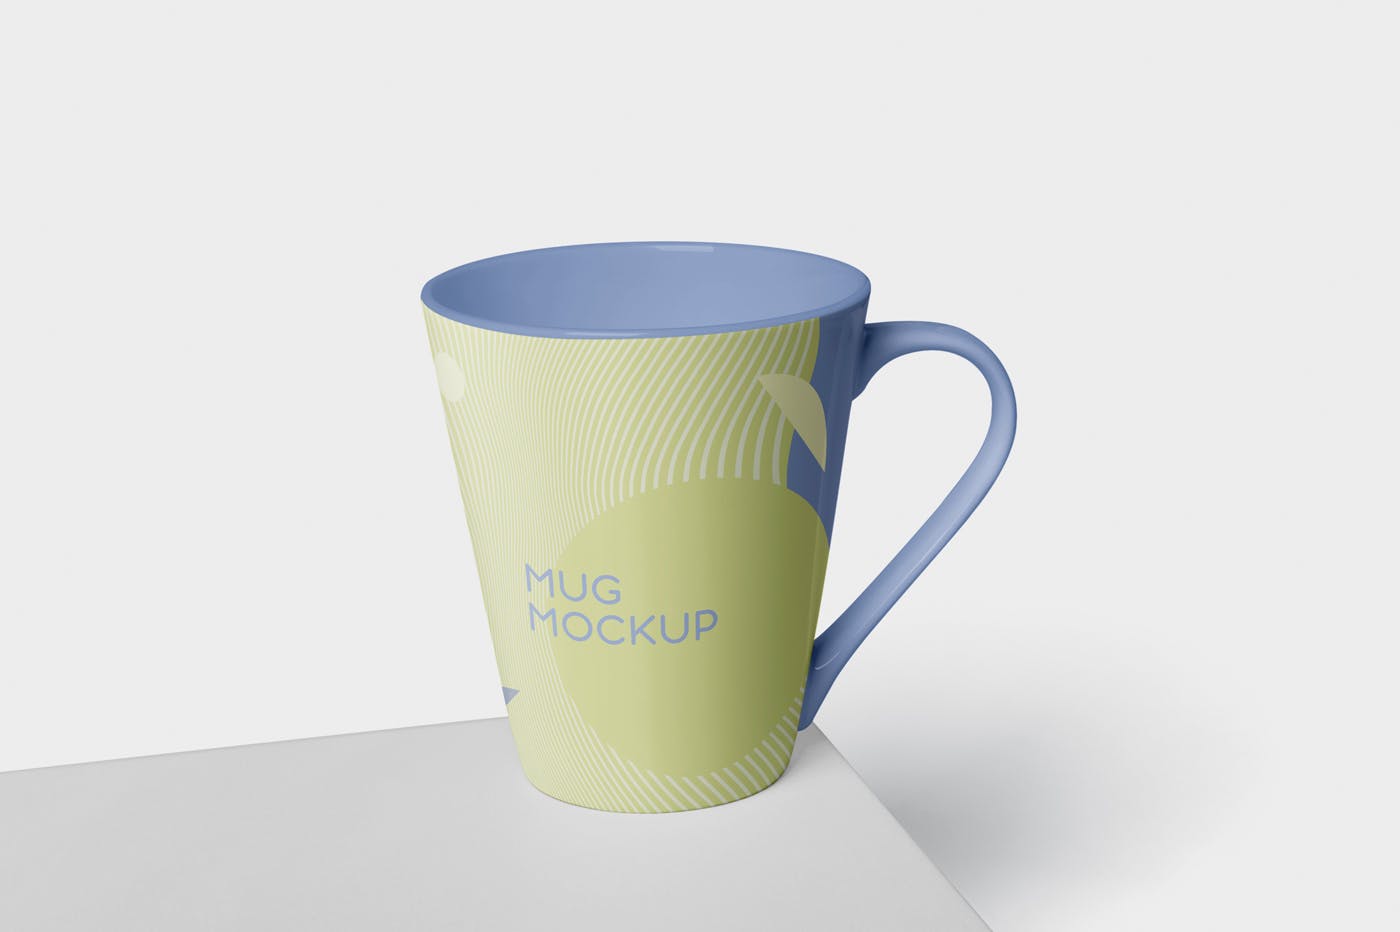 锥形马克杯图案设计16图库精选 Mug Mockup – Cone Shaped插图(2)